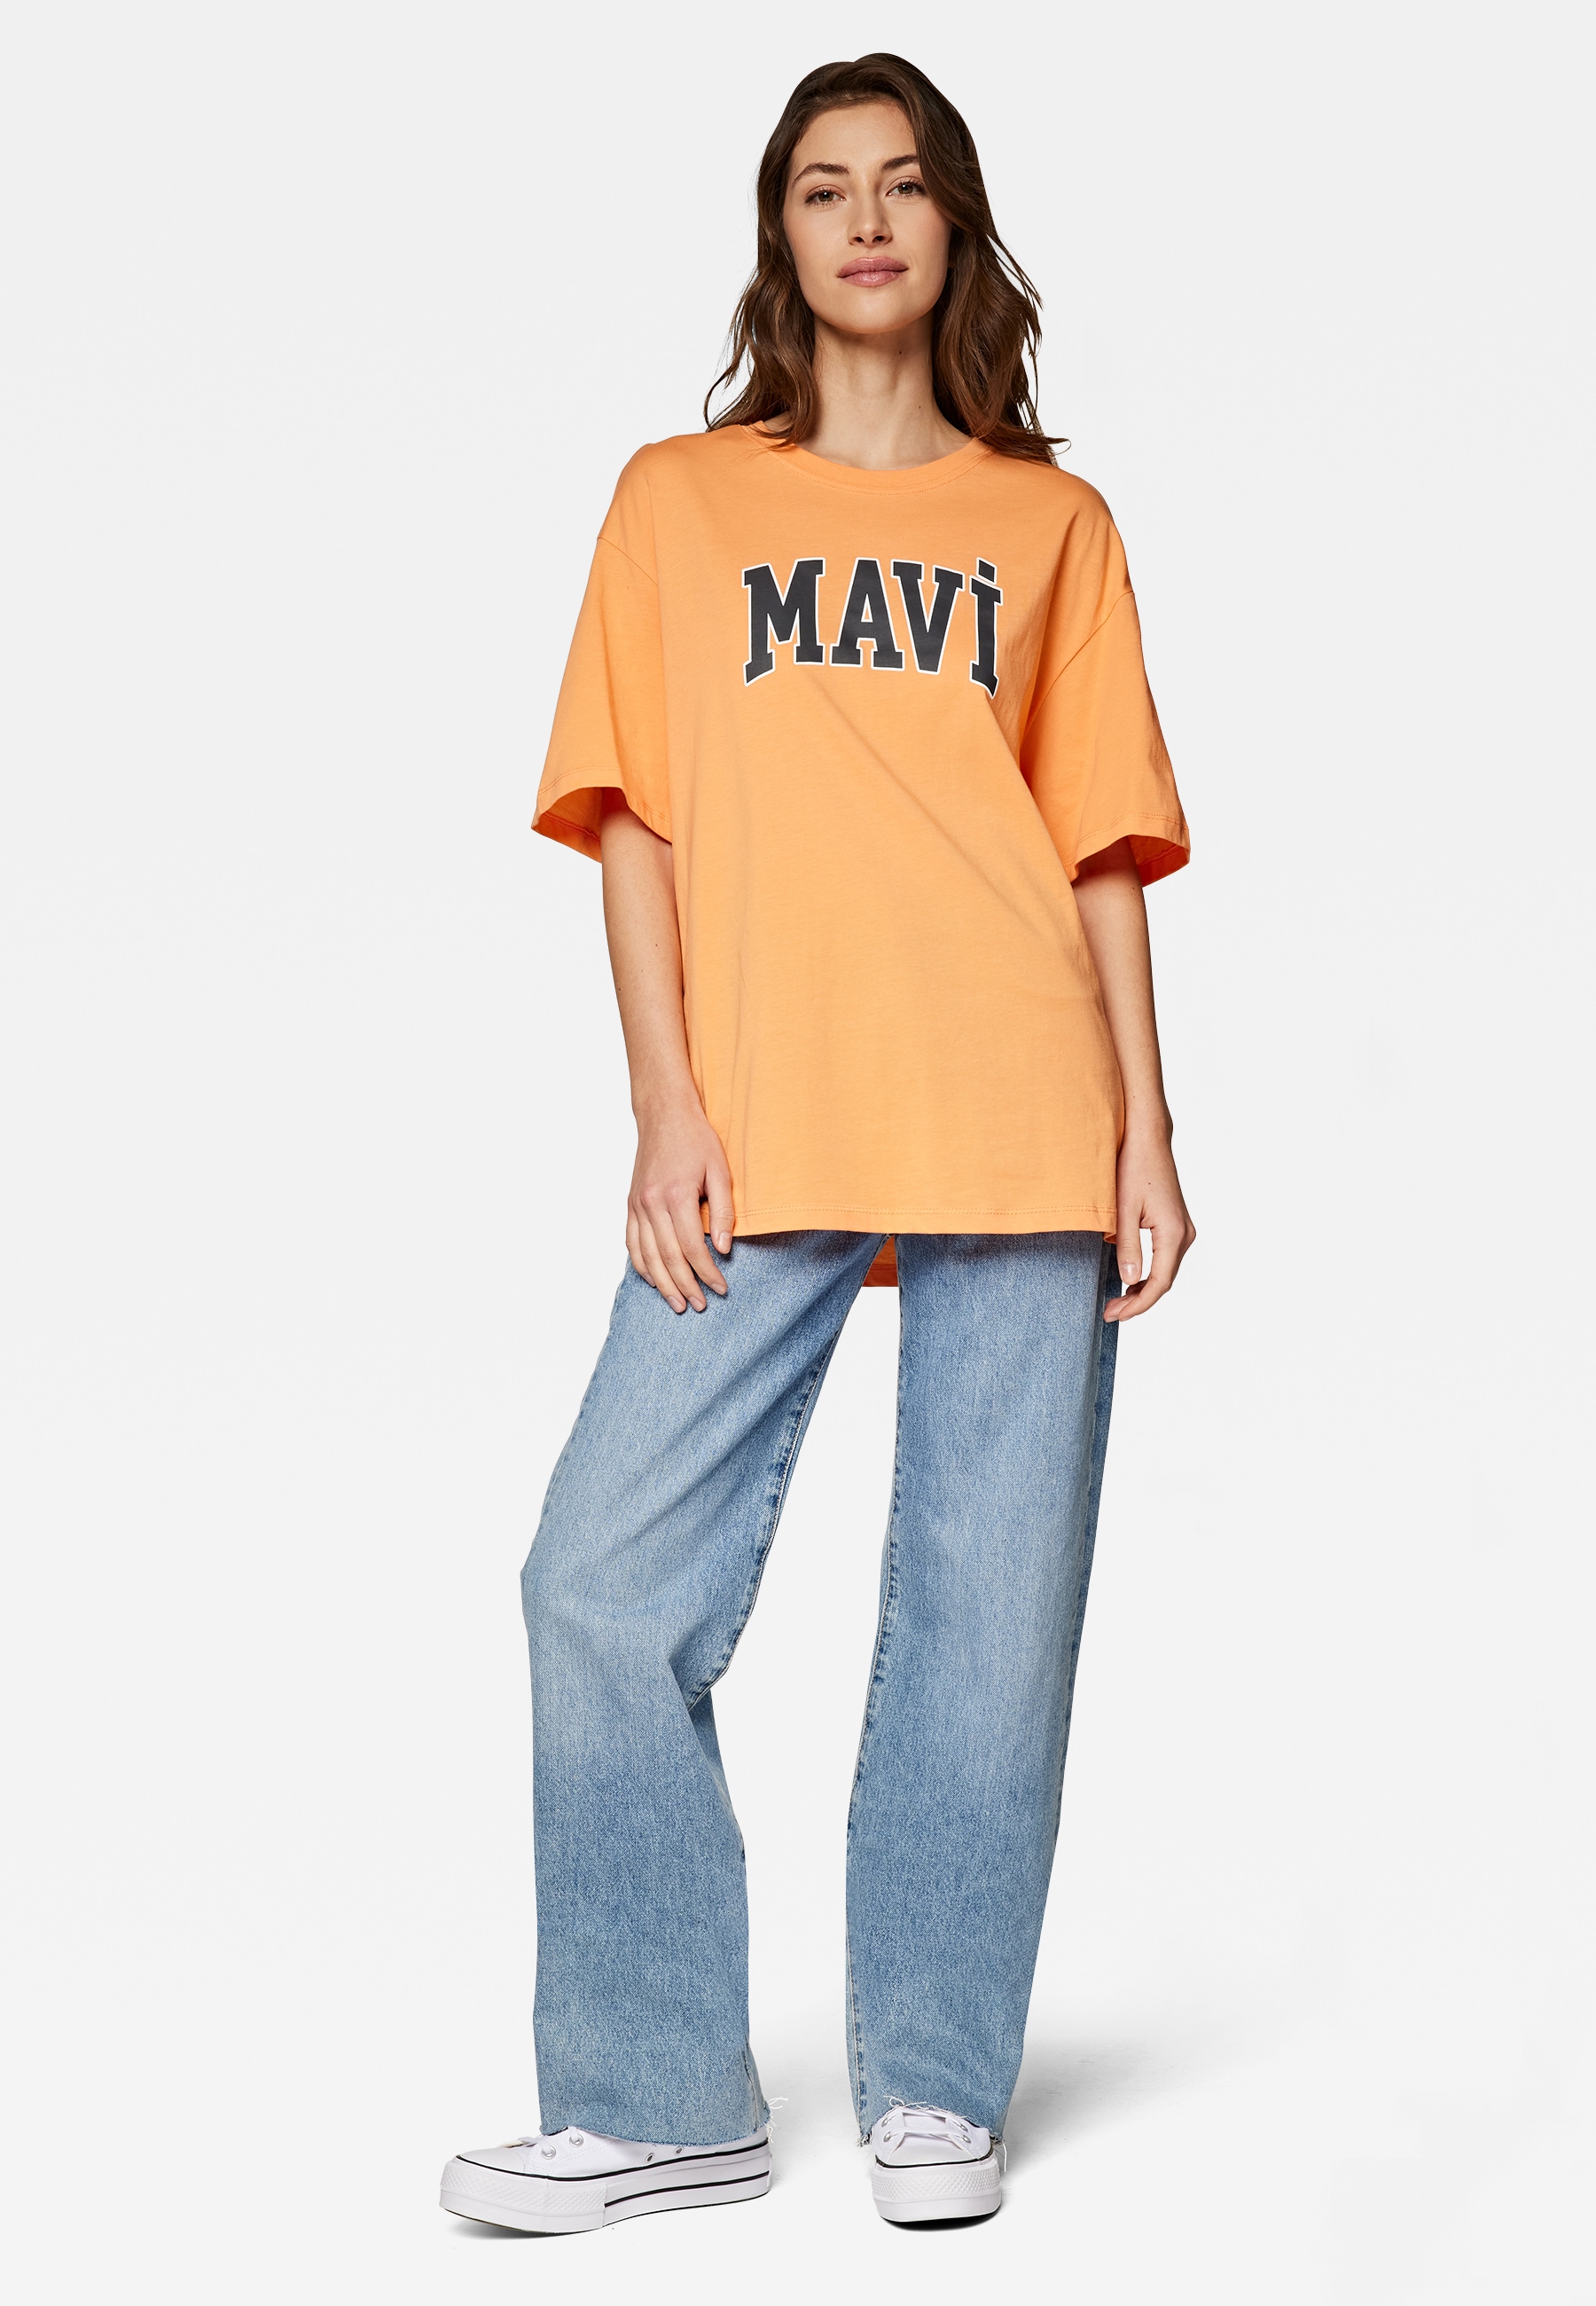 Mavi T-Shirt »MAVI PRINTED TEE«, Oversize T-Shirt Mit Mavi Print